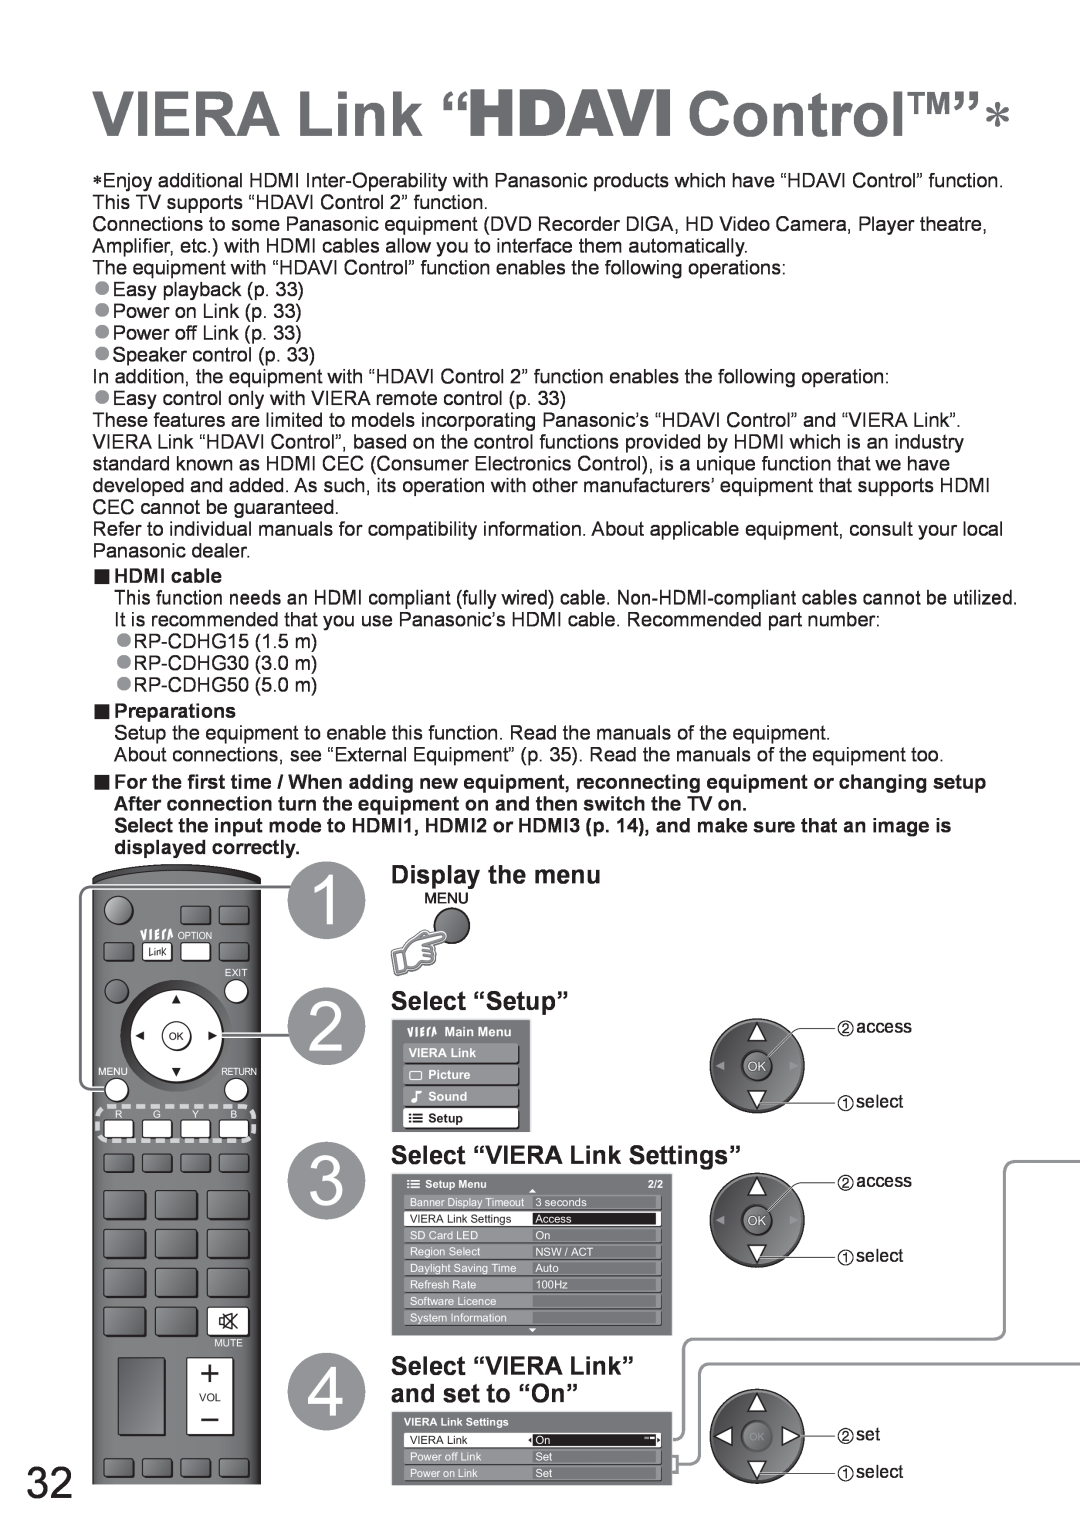 Panasonic TH-50PZ700A Select “VIERA Link Settings”, Select “VIERA Link” and set to “On”, VIERA Link “ ControlTM”∗ 